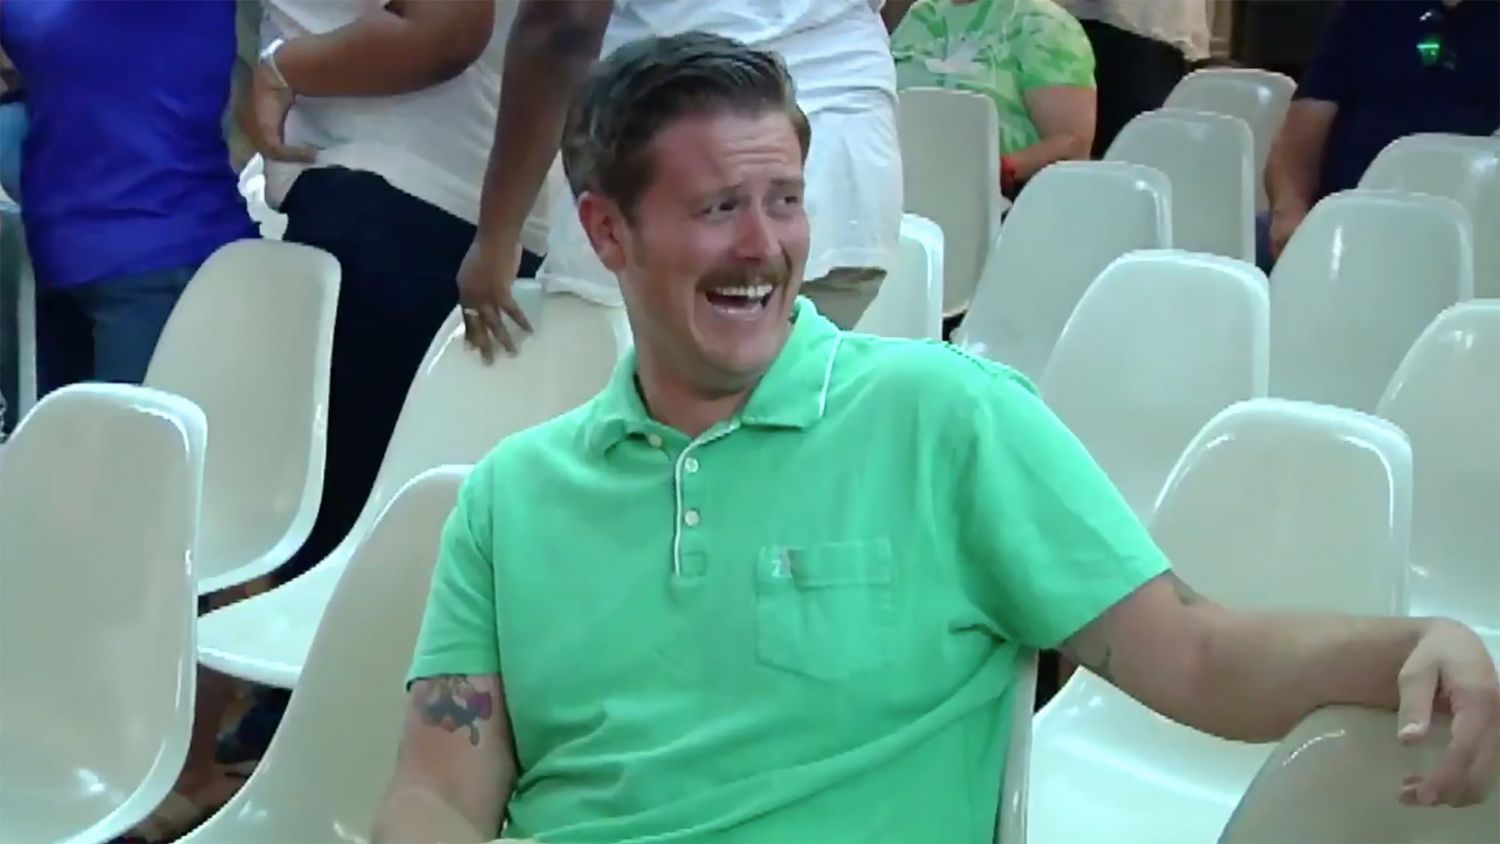 Man in green shirt laughs at pro-trump protesters at Tuscon City Council meeting